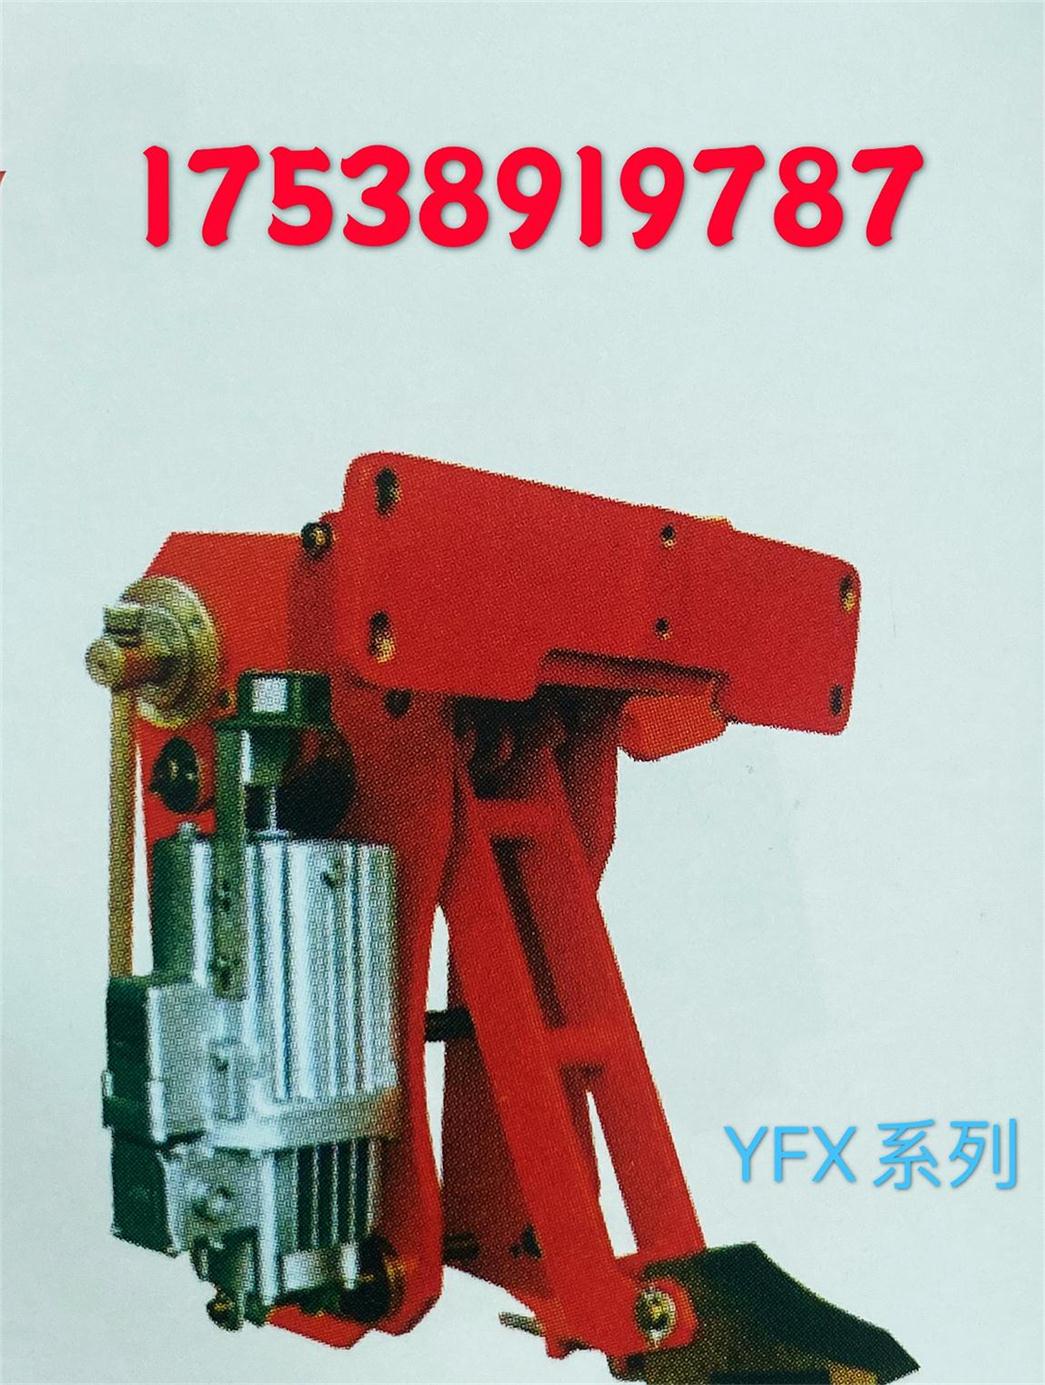 YFX系列电力液压防风铁楔制动器